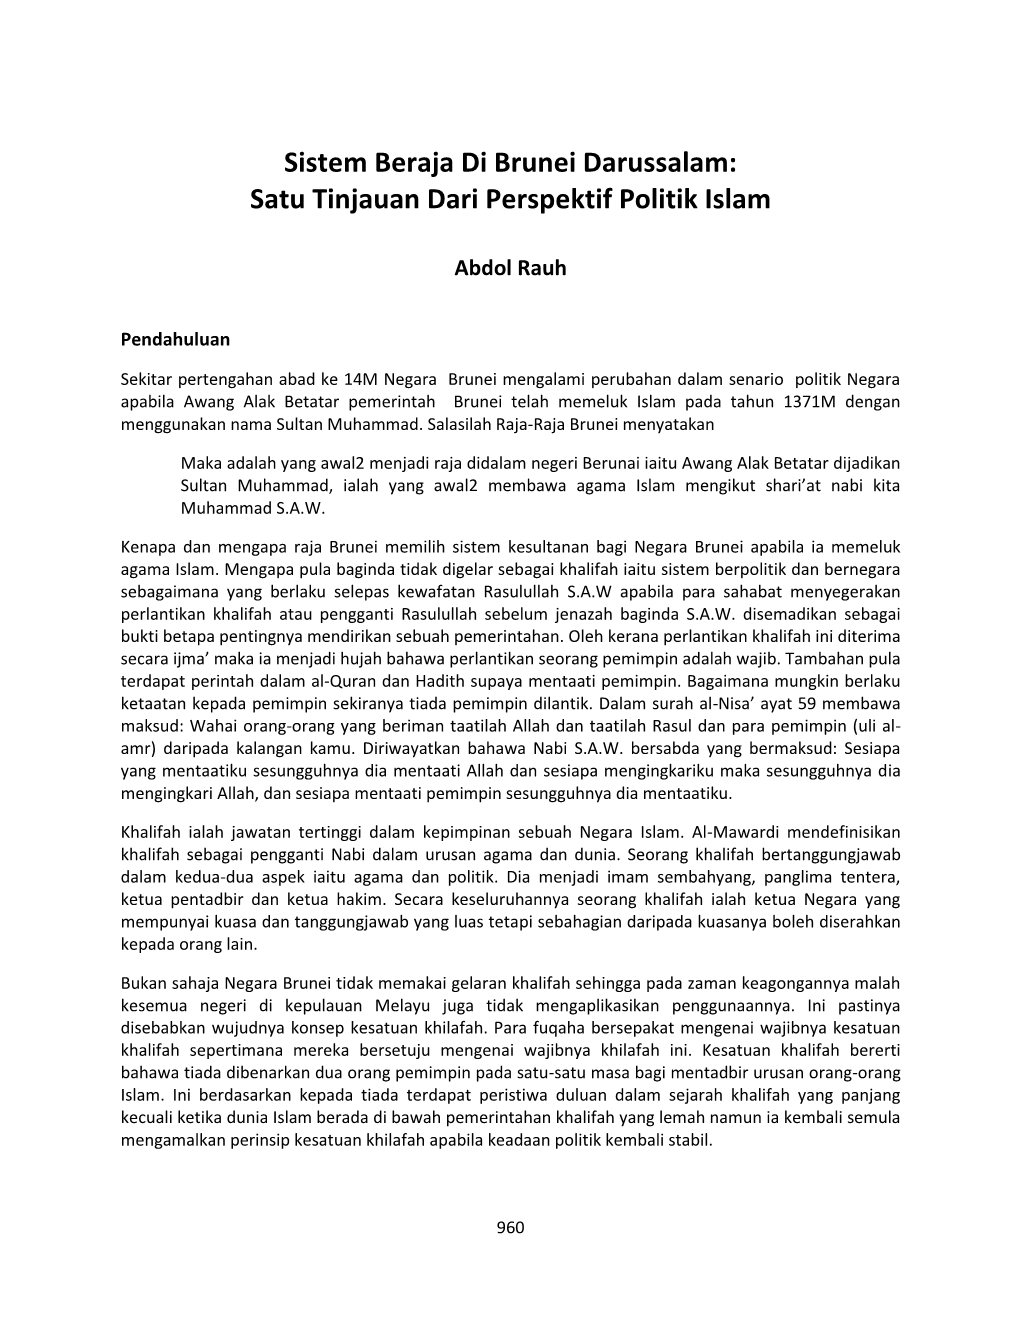 Sistem Beraja Di Brunei Darussalam: Satu Tinjauan Dari Perspektif Politik Islam